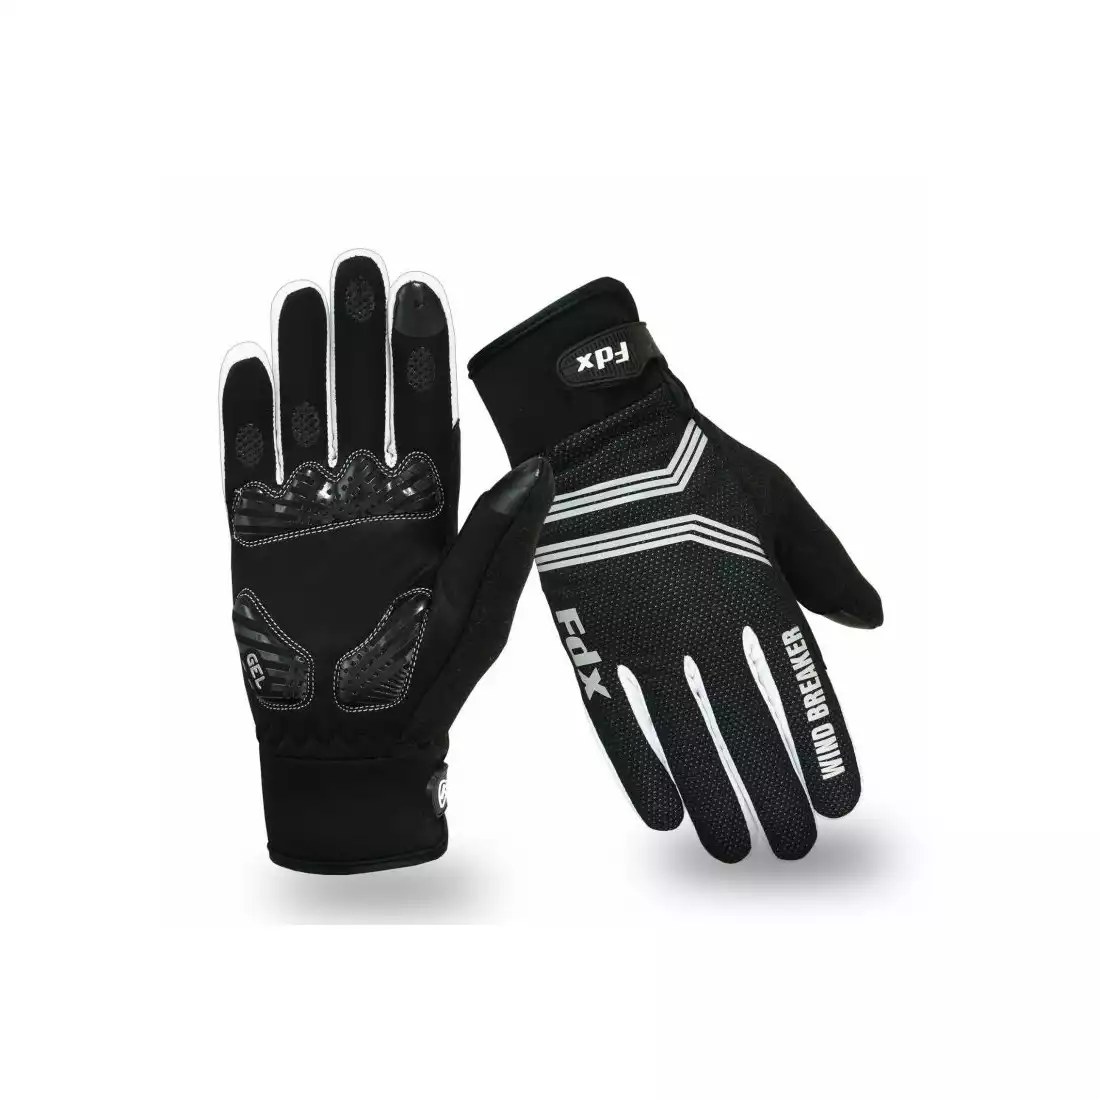 FDX zimowe rękawiczki rowerowe Wind Breaker Gel, czarno-białe